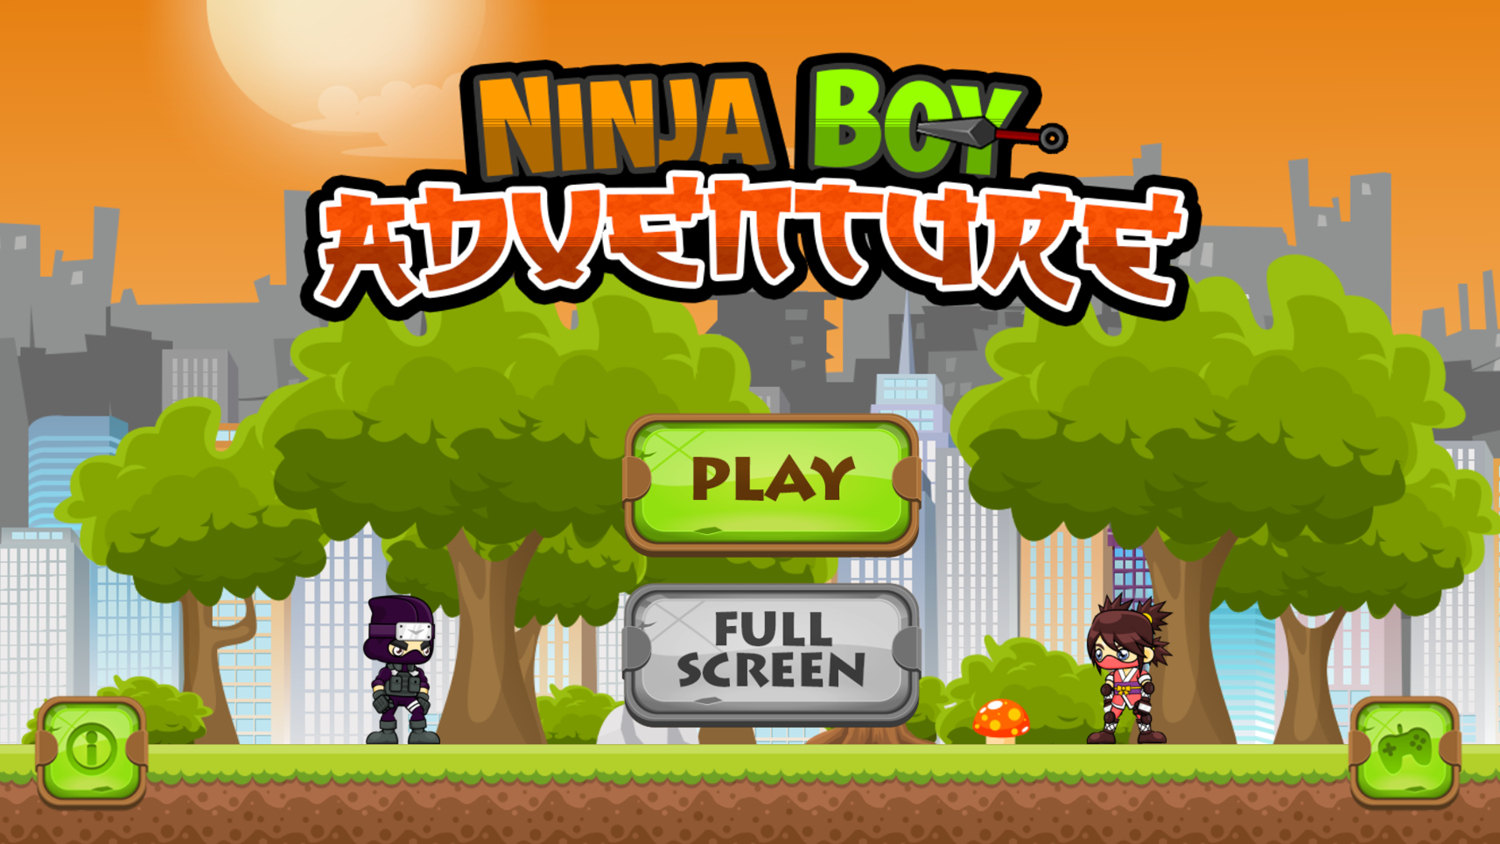 Ninja Boy Adventure Game Welcome Screen Screenshot.